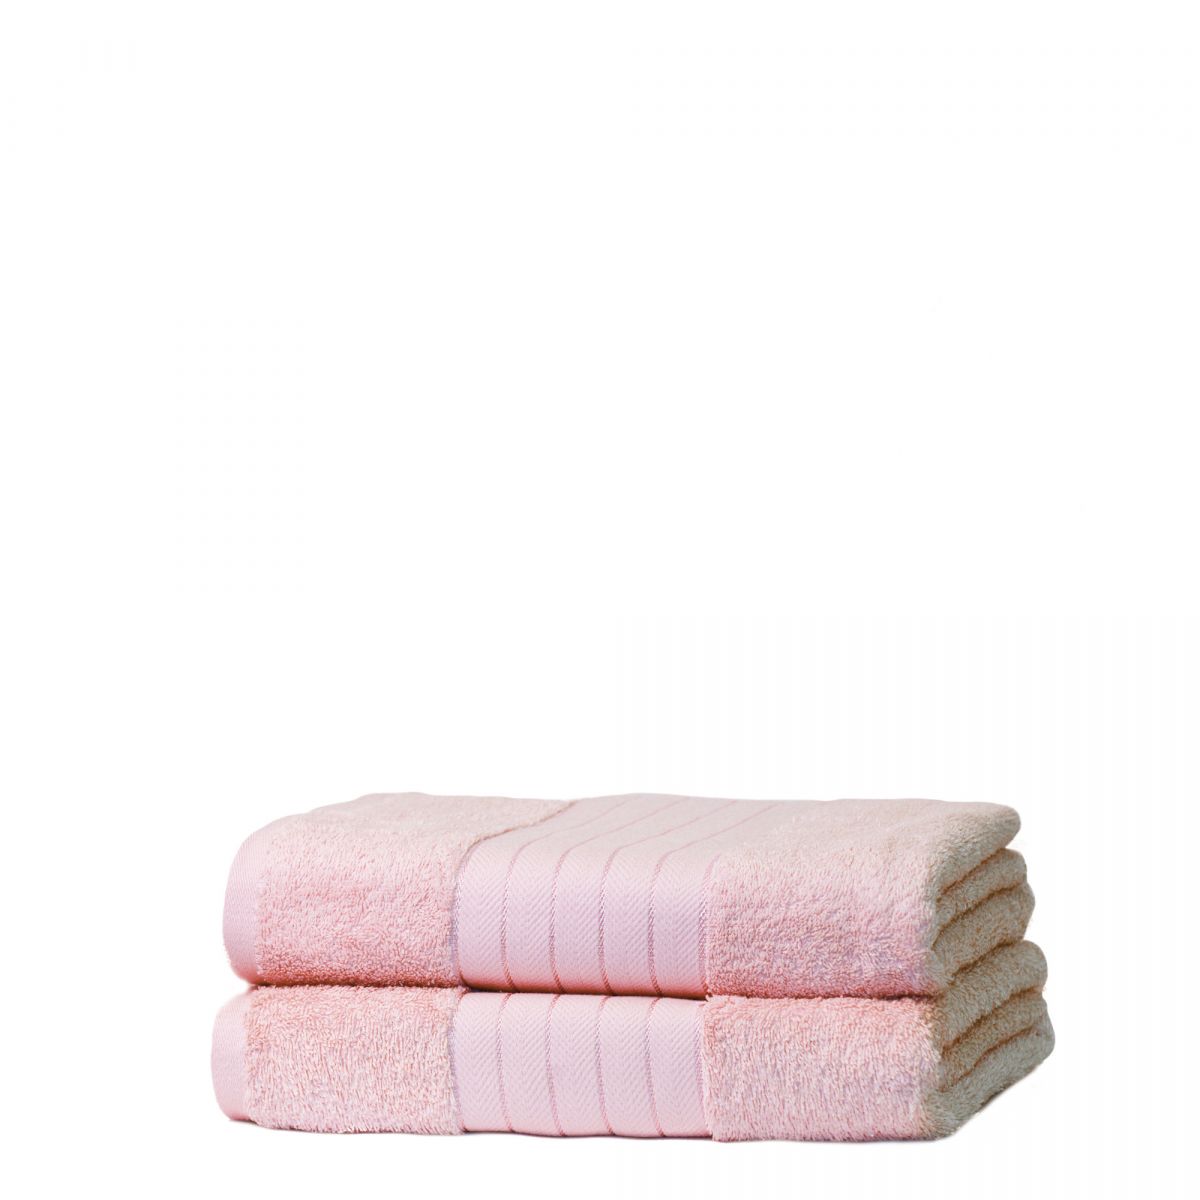 Luxury 100% Cotton 2 Jumbo Bath Sheets Large Towels Bale - Light Pink